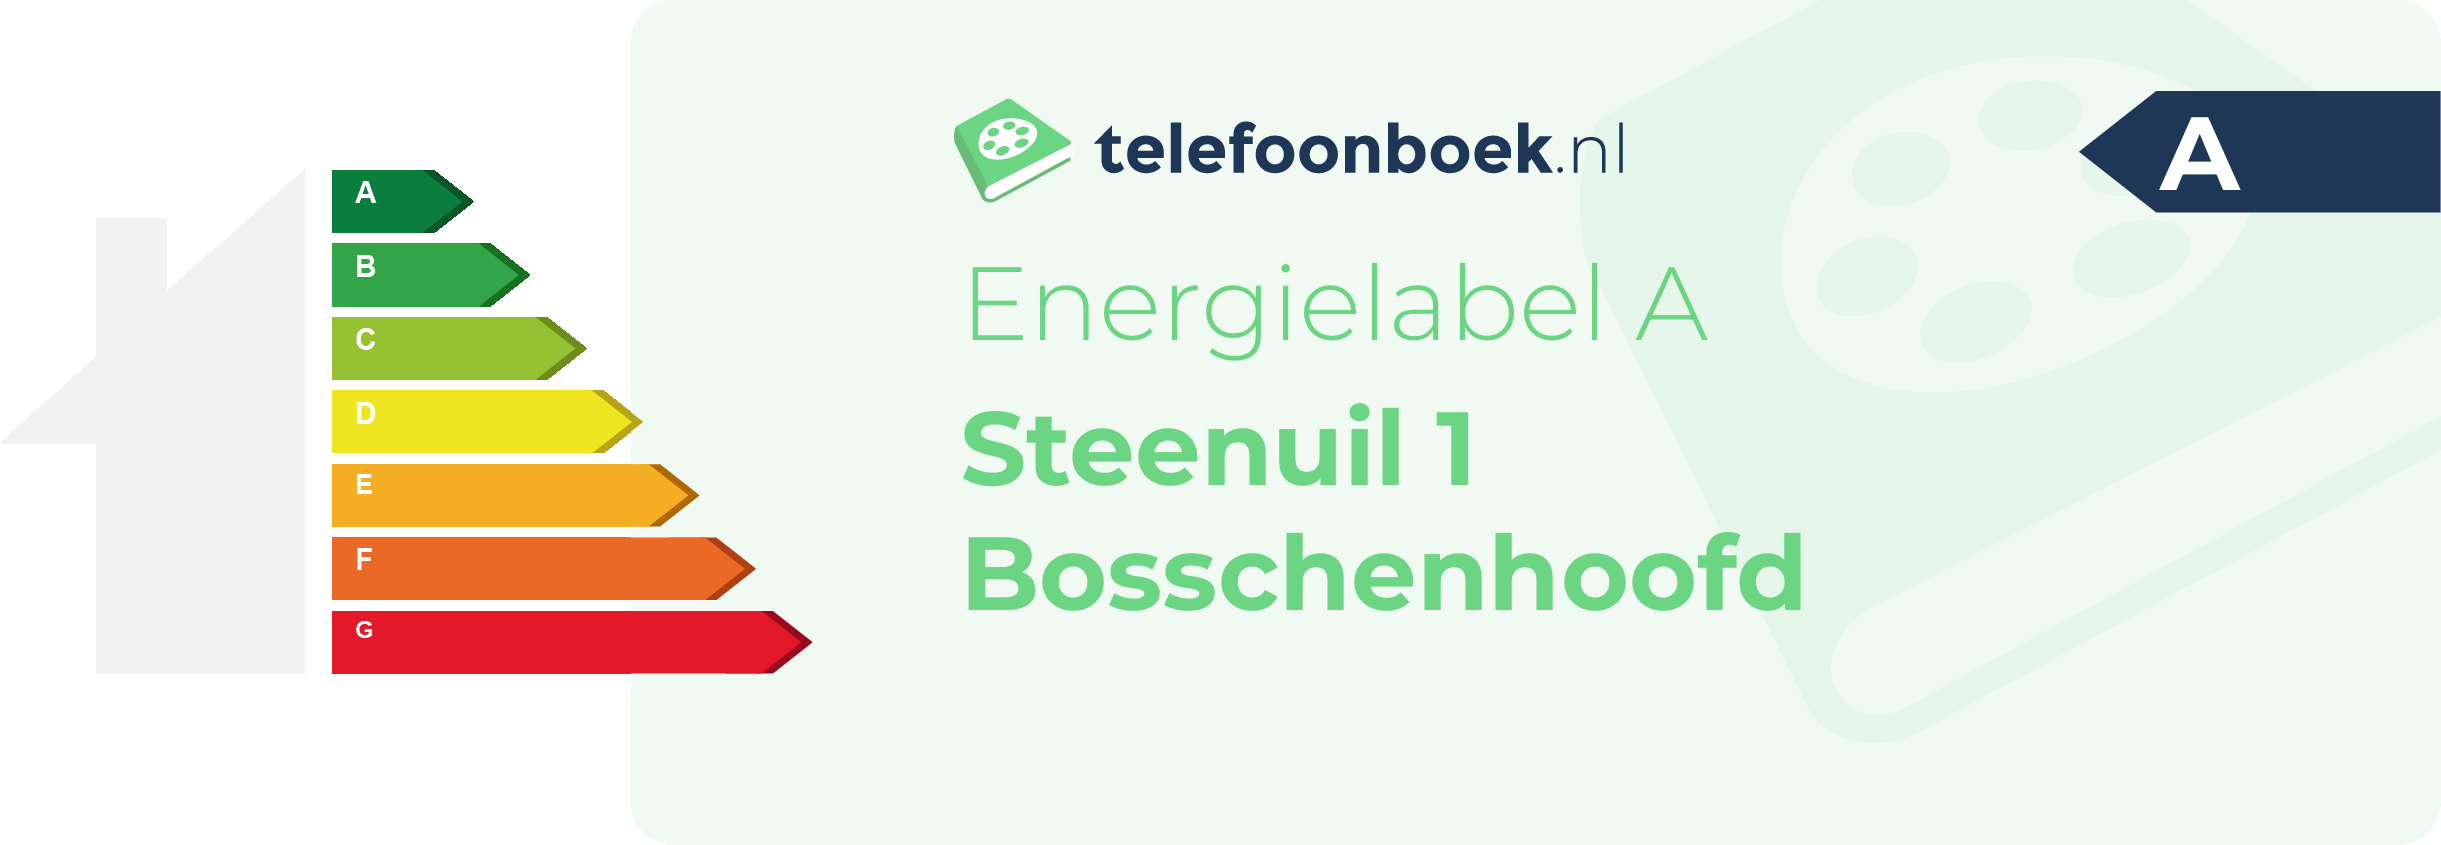 Energielabel Steenuil 1 Bosschenhoofd